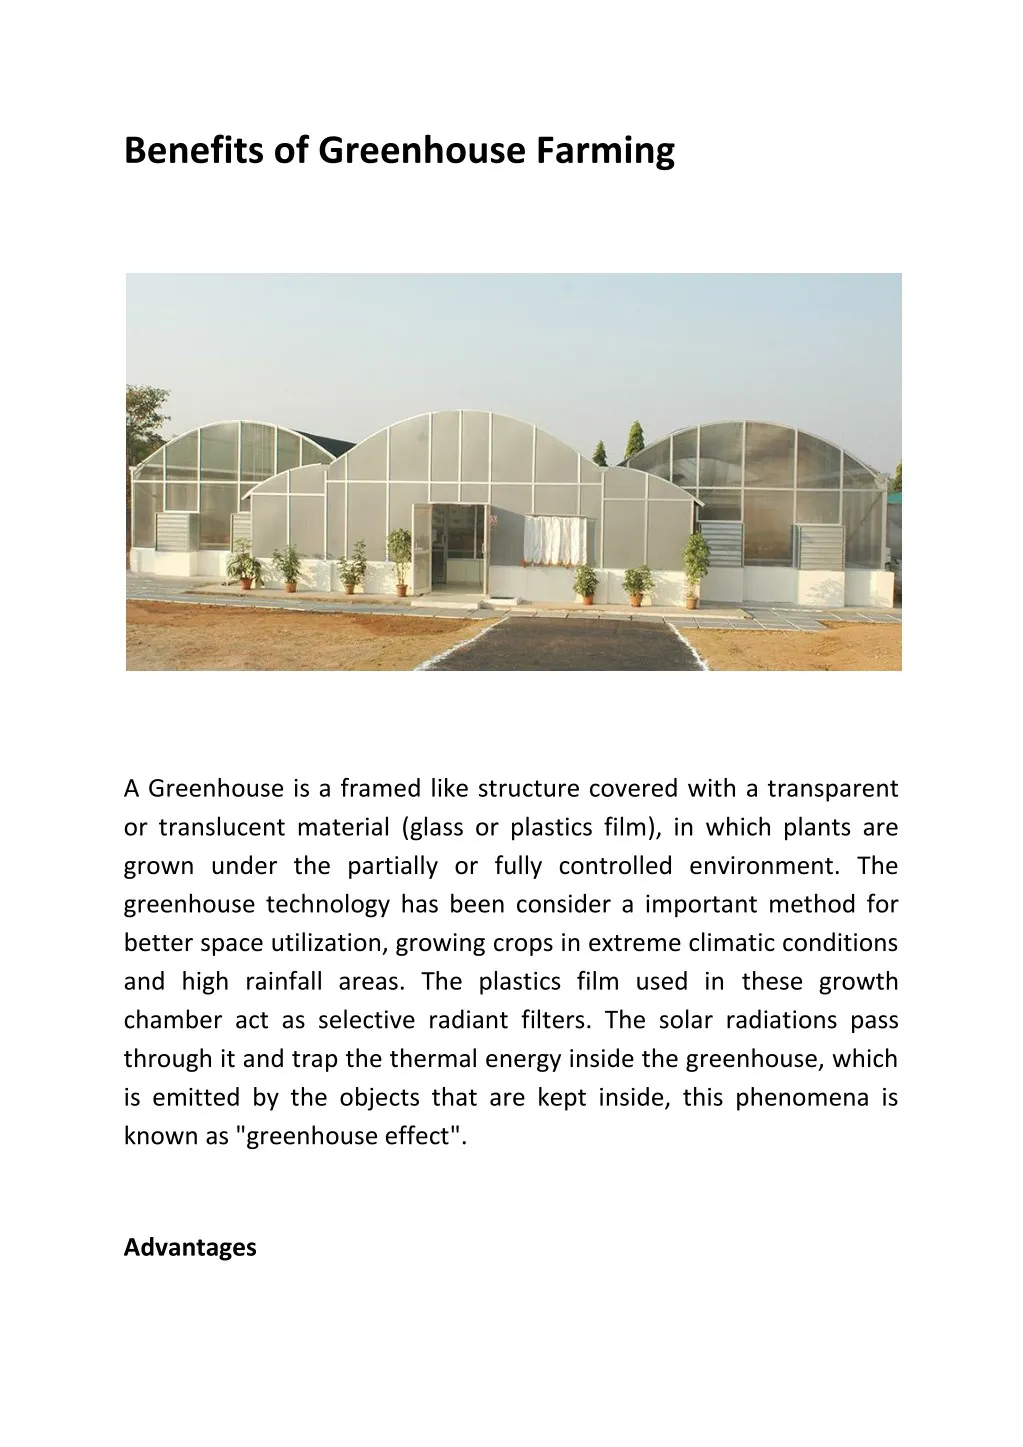 benefits of greenhouse farming